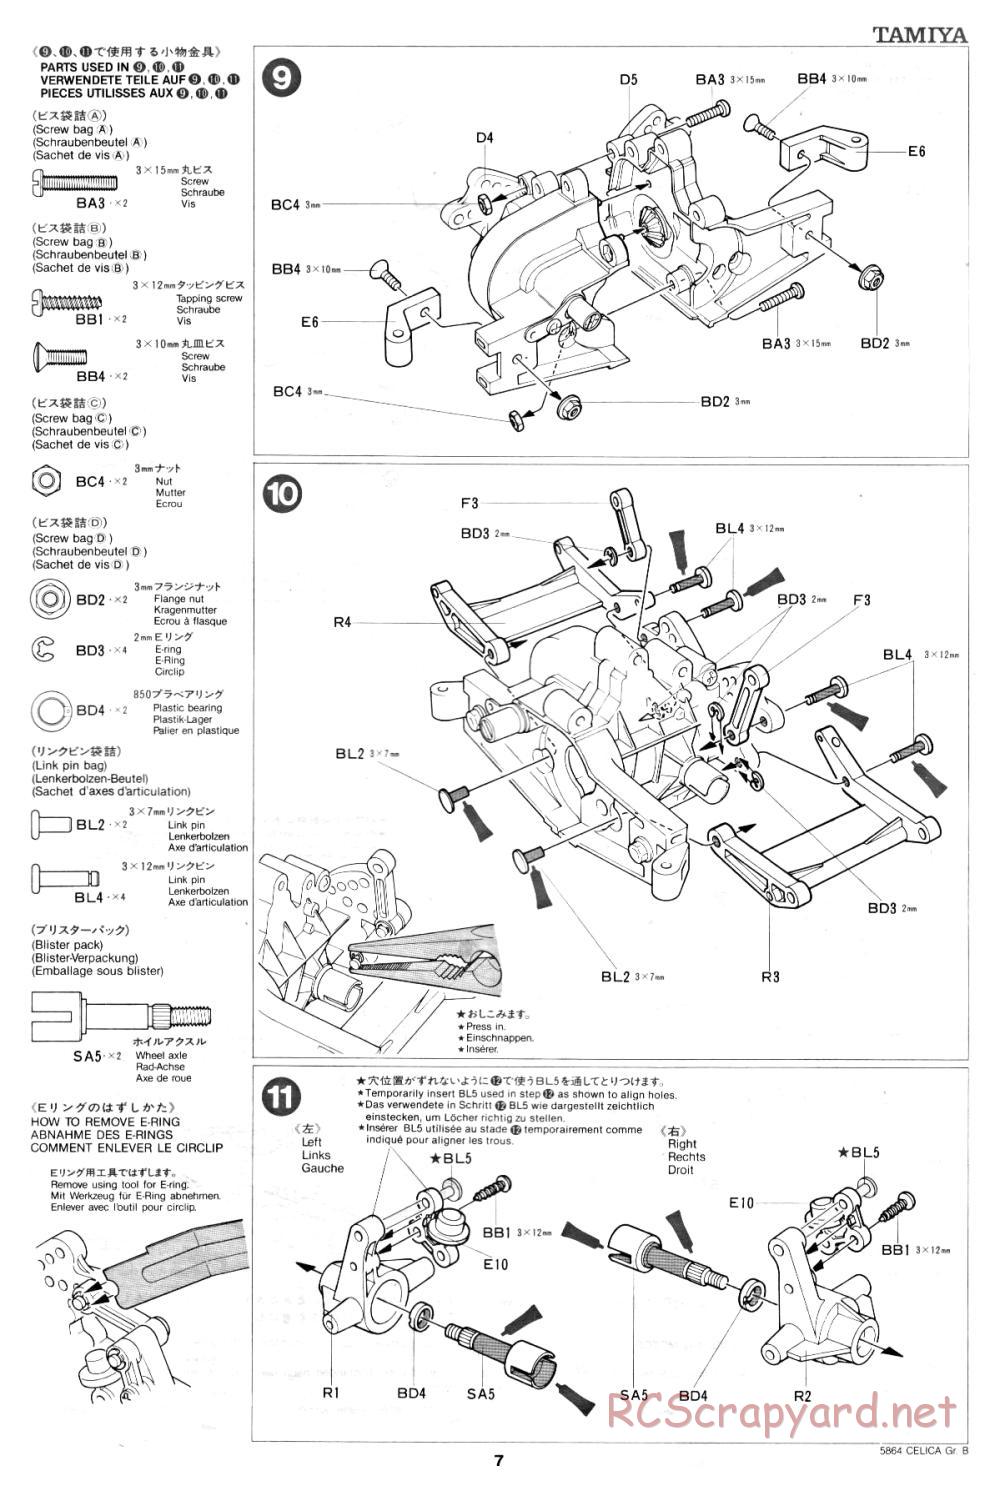 Tamiya - Toyota Celica Gr.B Rally Special - 58064 - Manual - Page 7